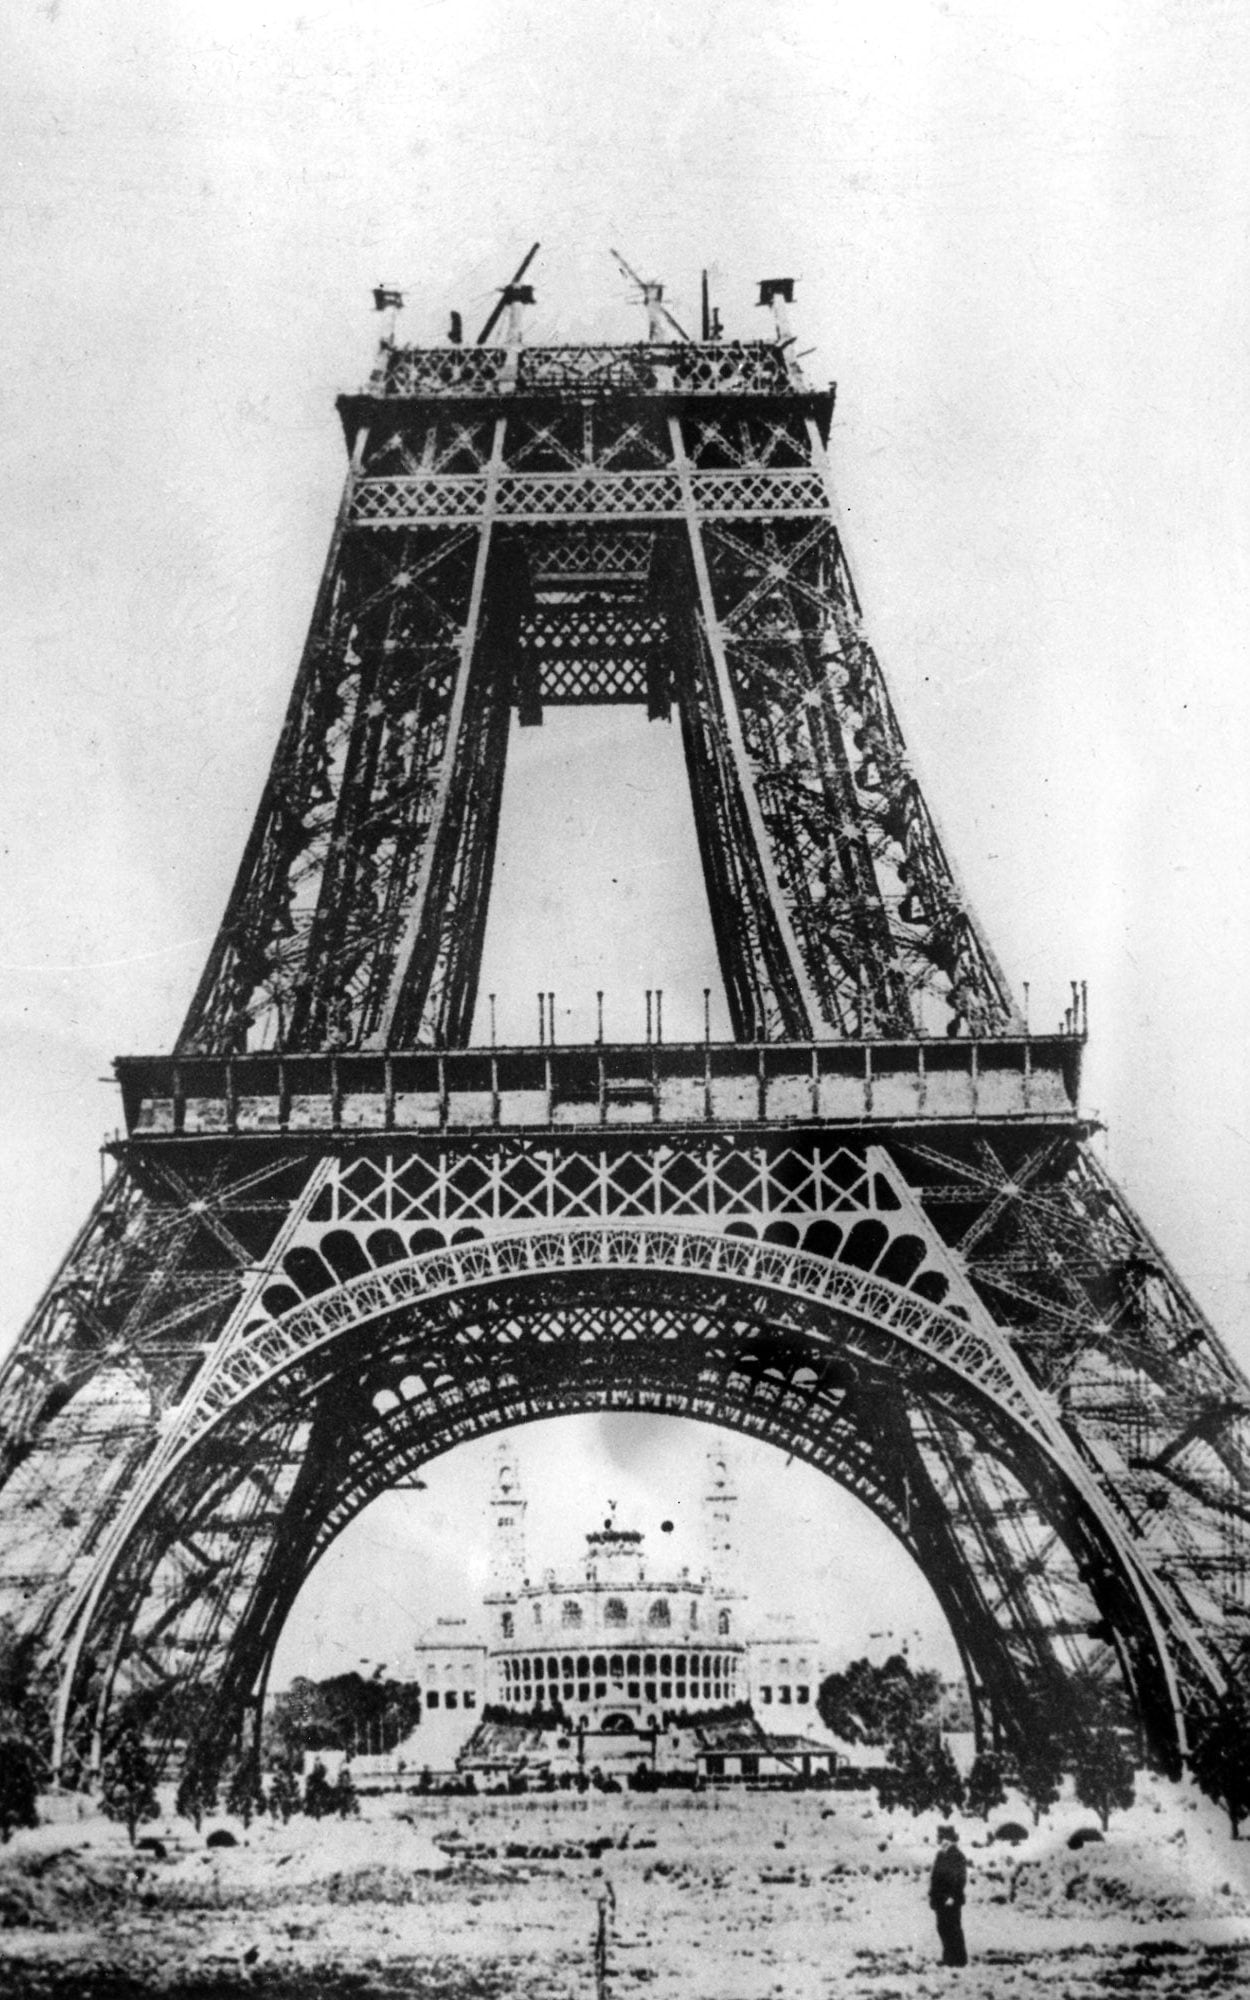 https://www.telegraph.co.uk/news/2017/03/31/day-1889-paris-dramatic-icon-eiffel-tower-opens/